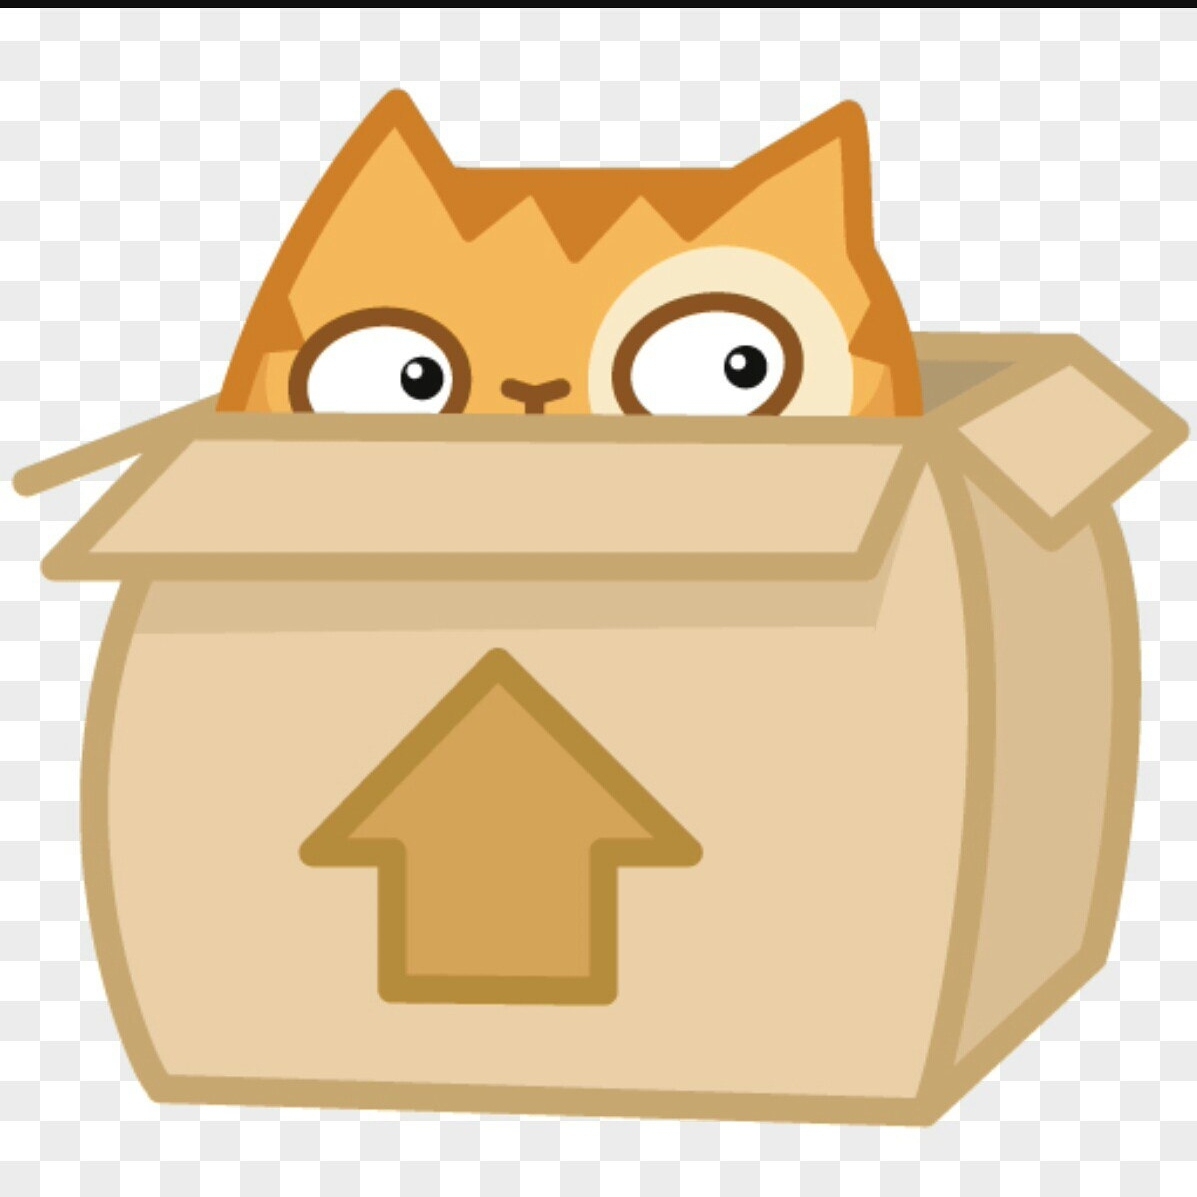 кошка в коробке рисунок